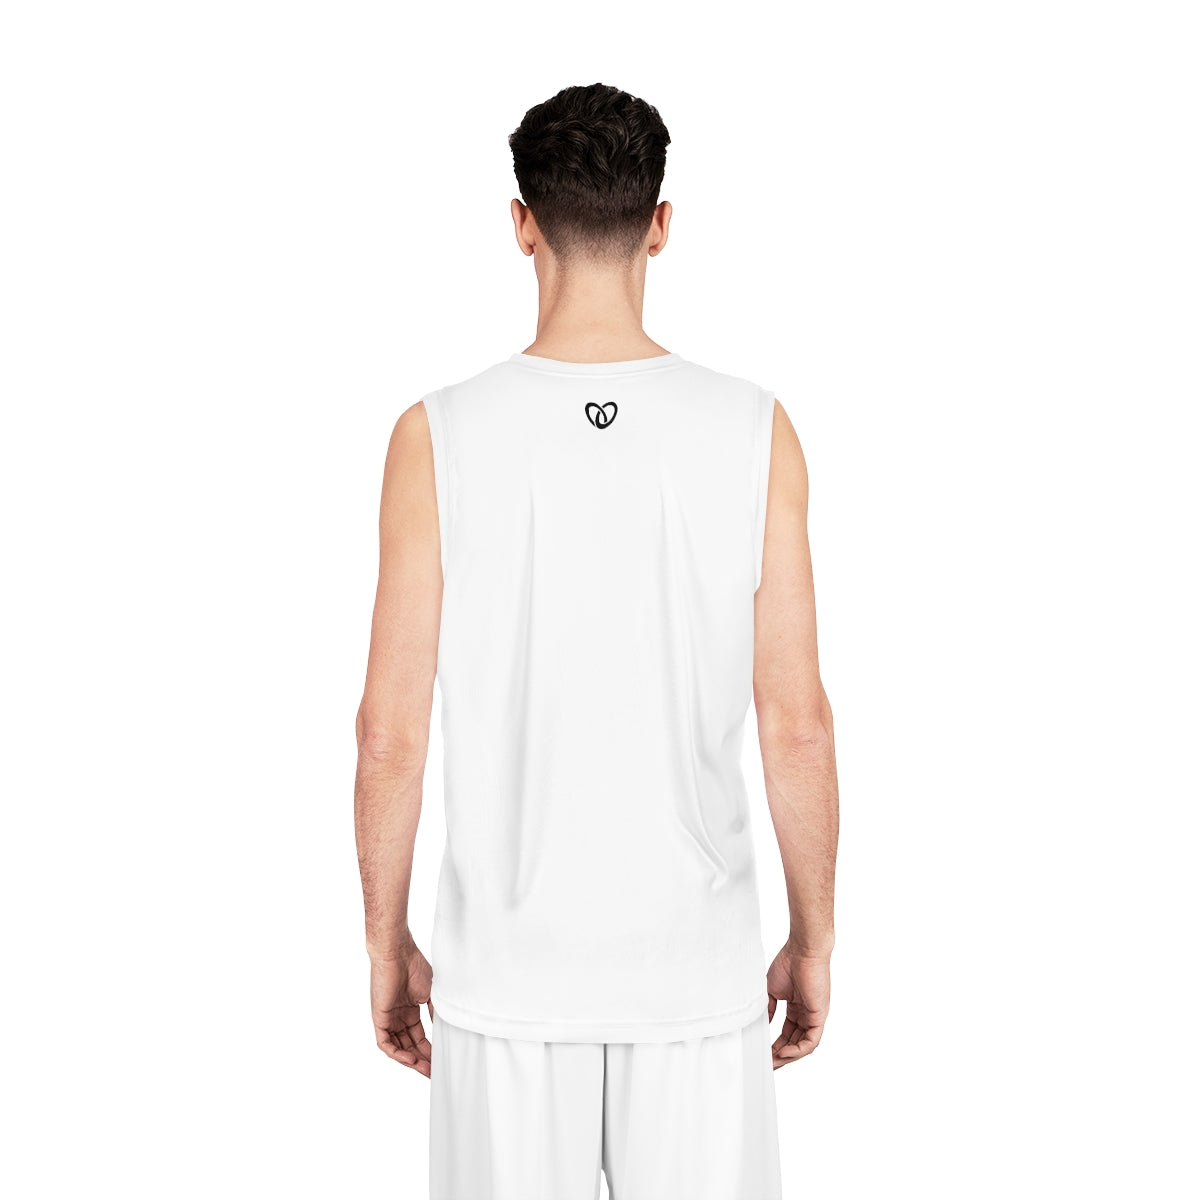 Unify Basketball Jersey - White/Black